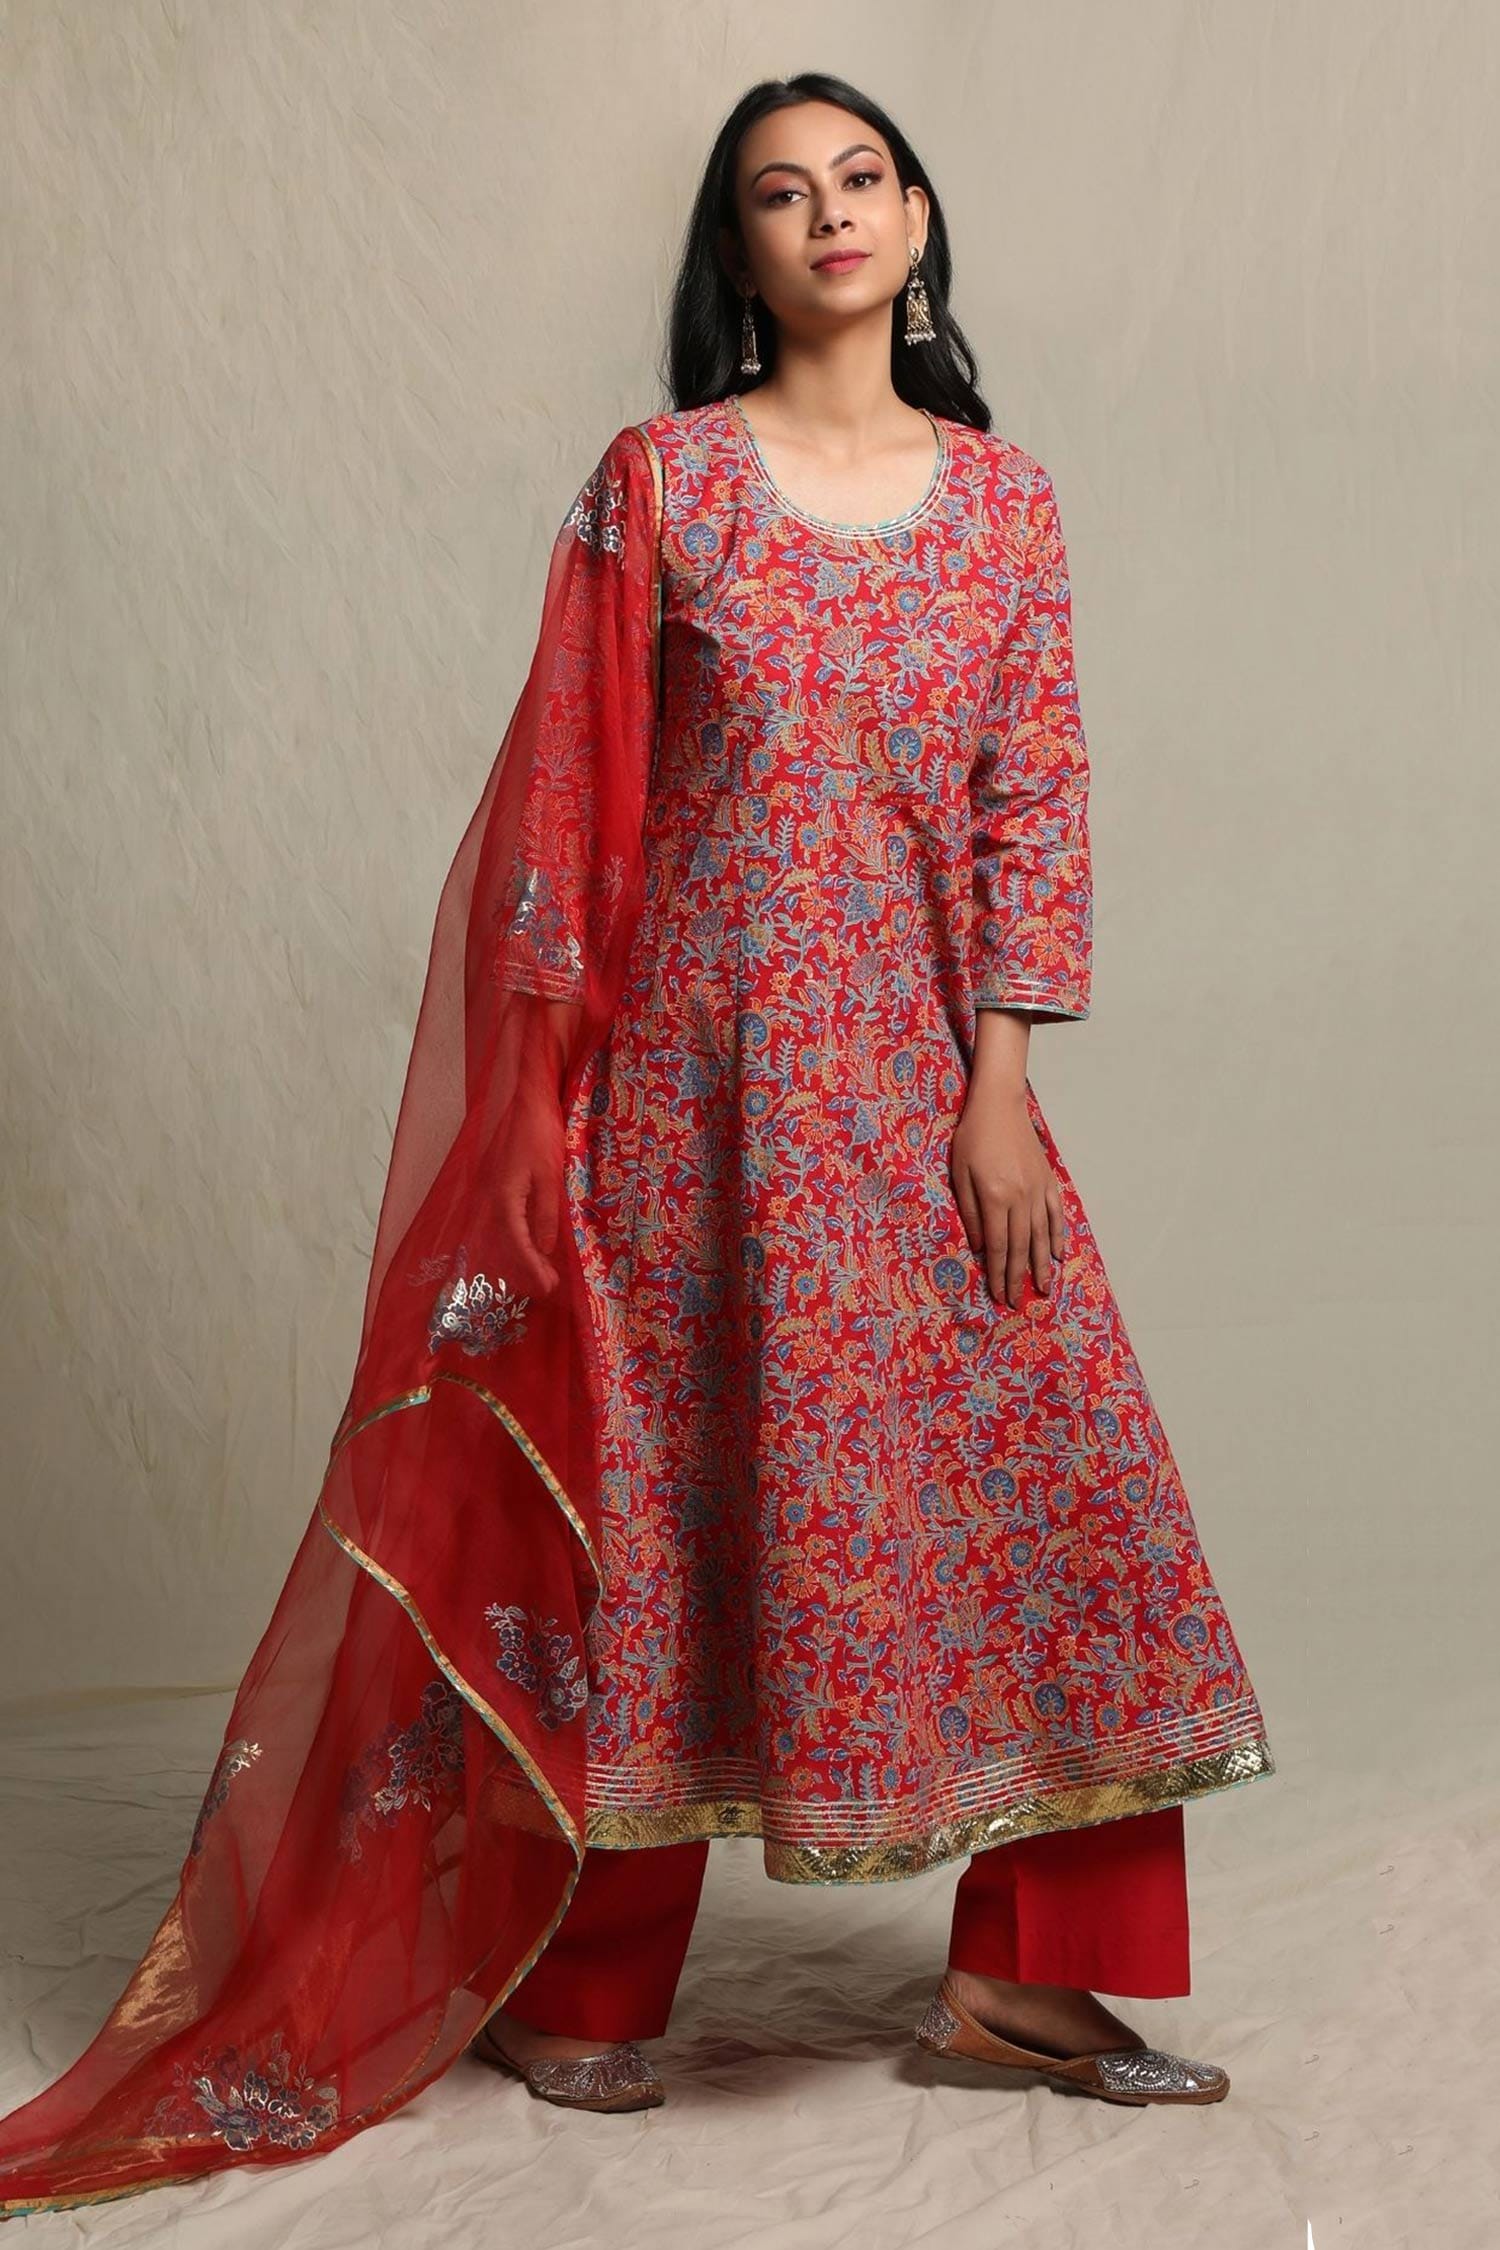 Ethnic Dresses - Buy Ethnic Dresses for Women Online - Myntra